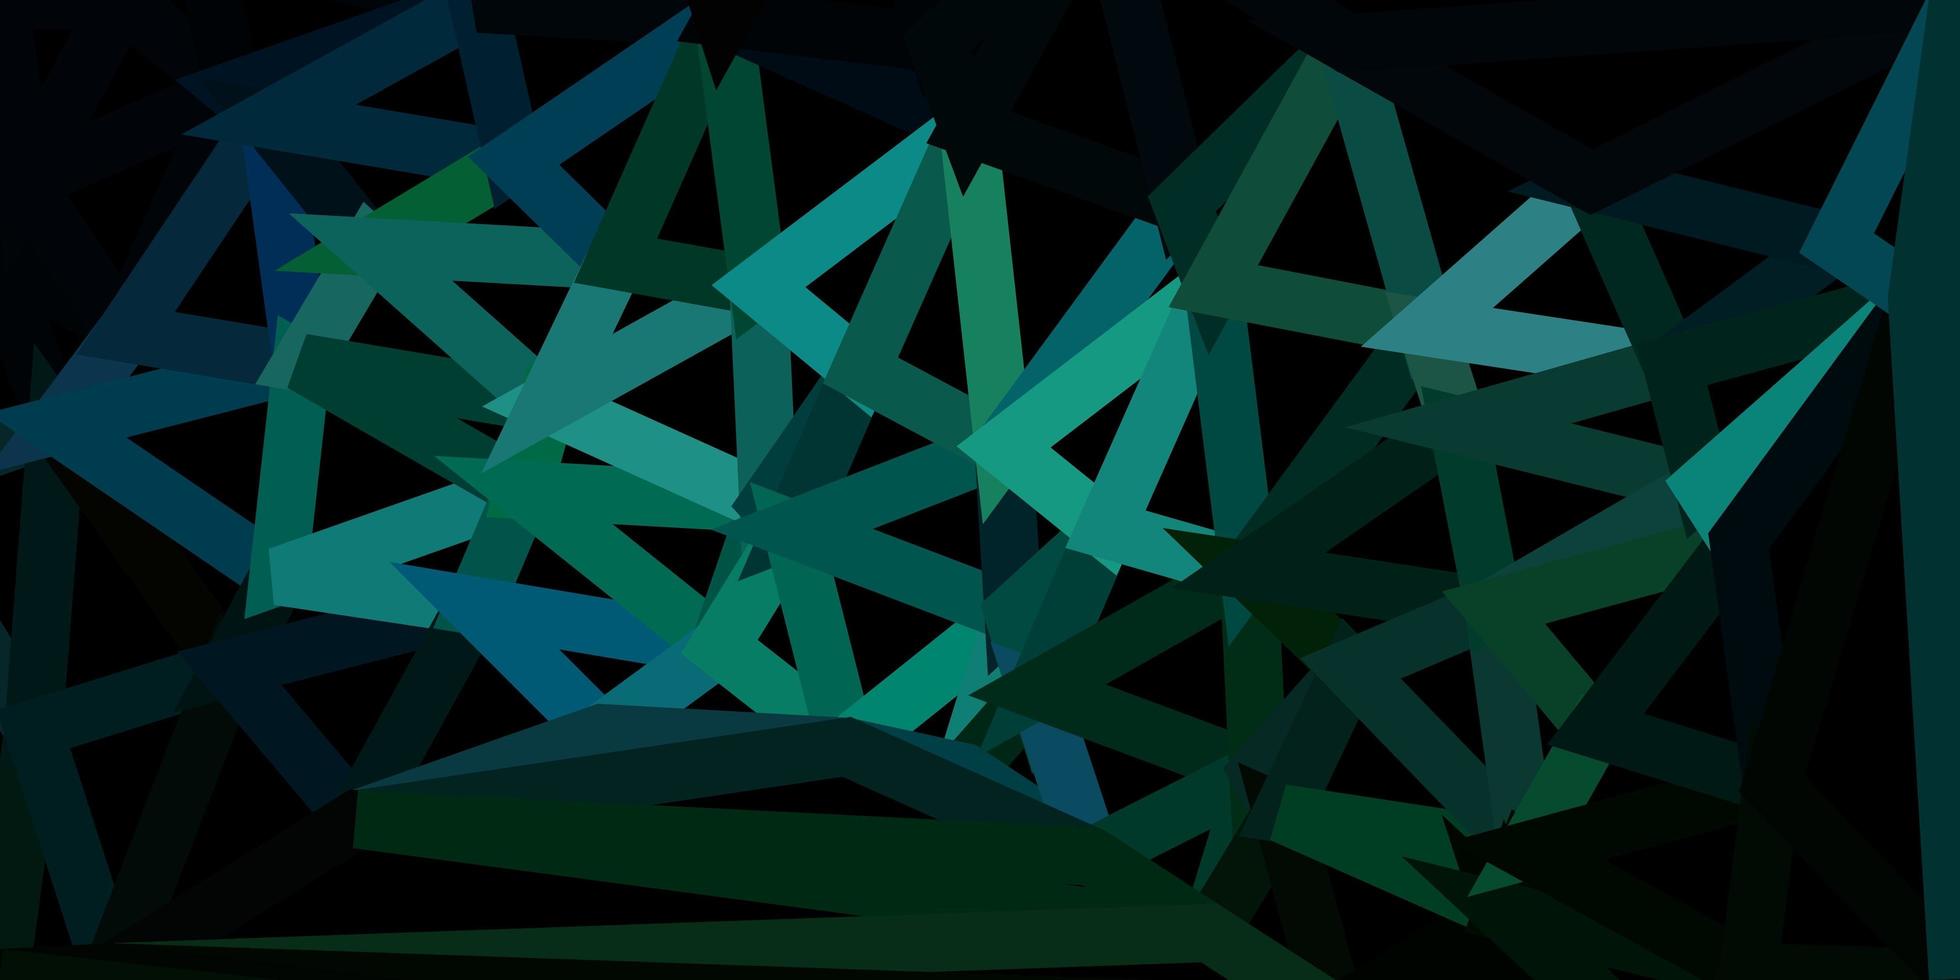 Dark blue, green vector polygonal background.